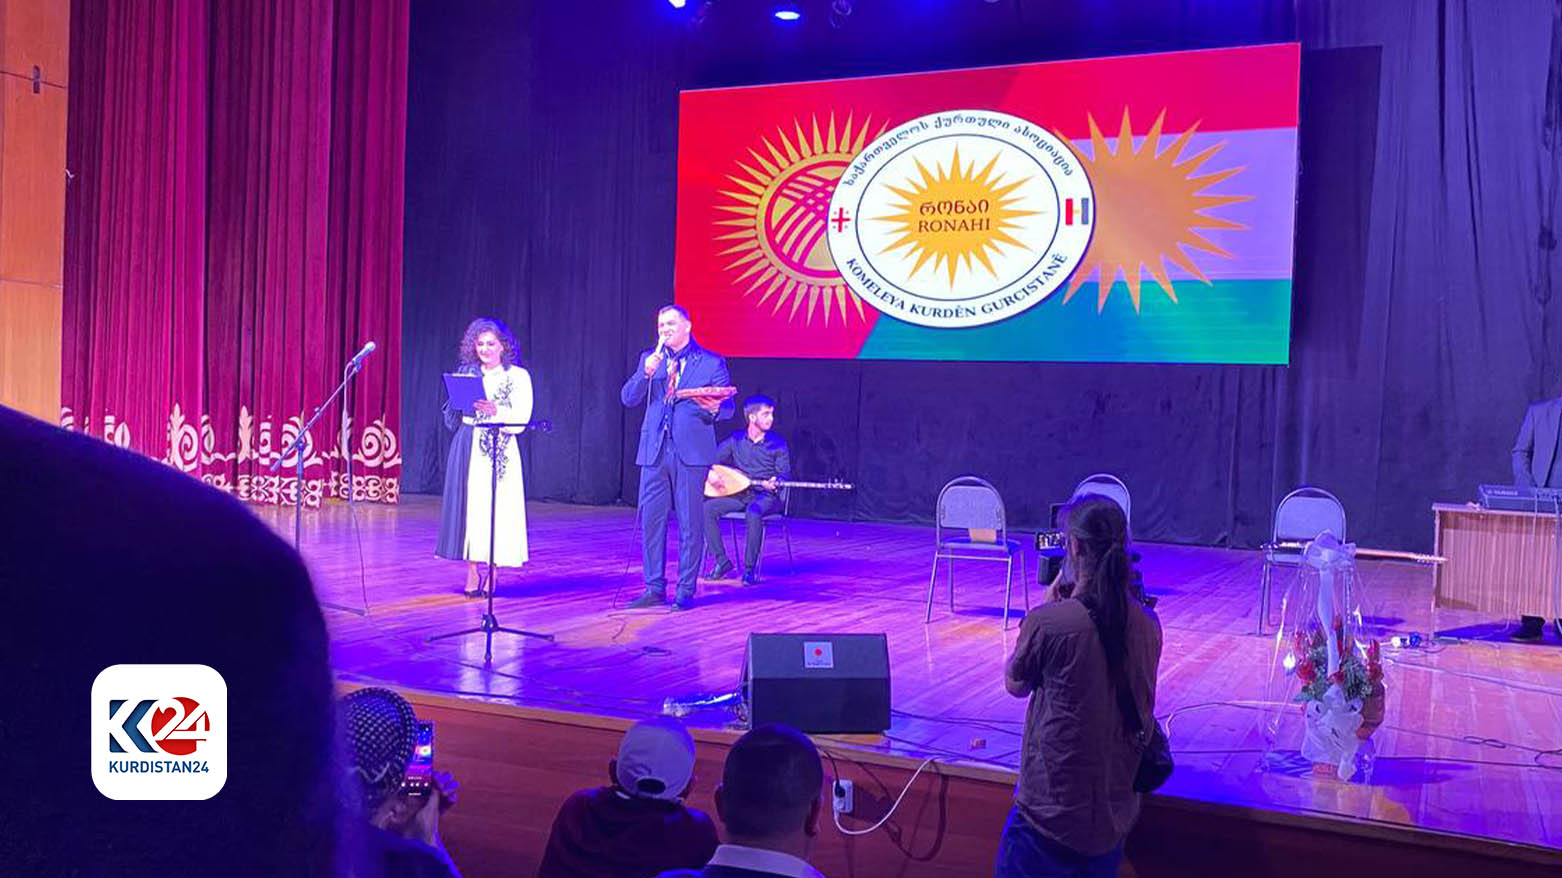 Congress for preserving Kurdish language held in Kyrgyzstan